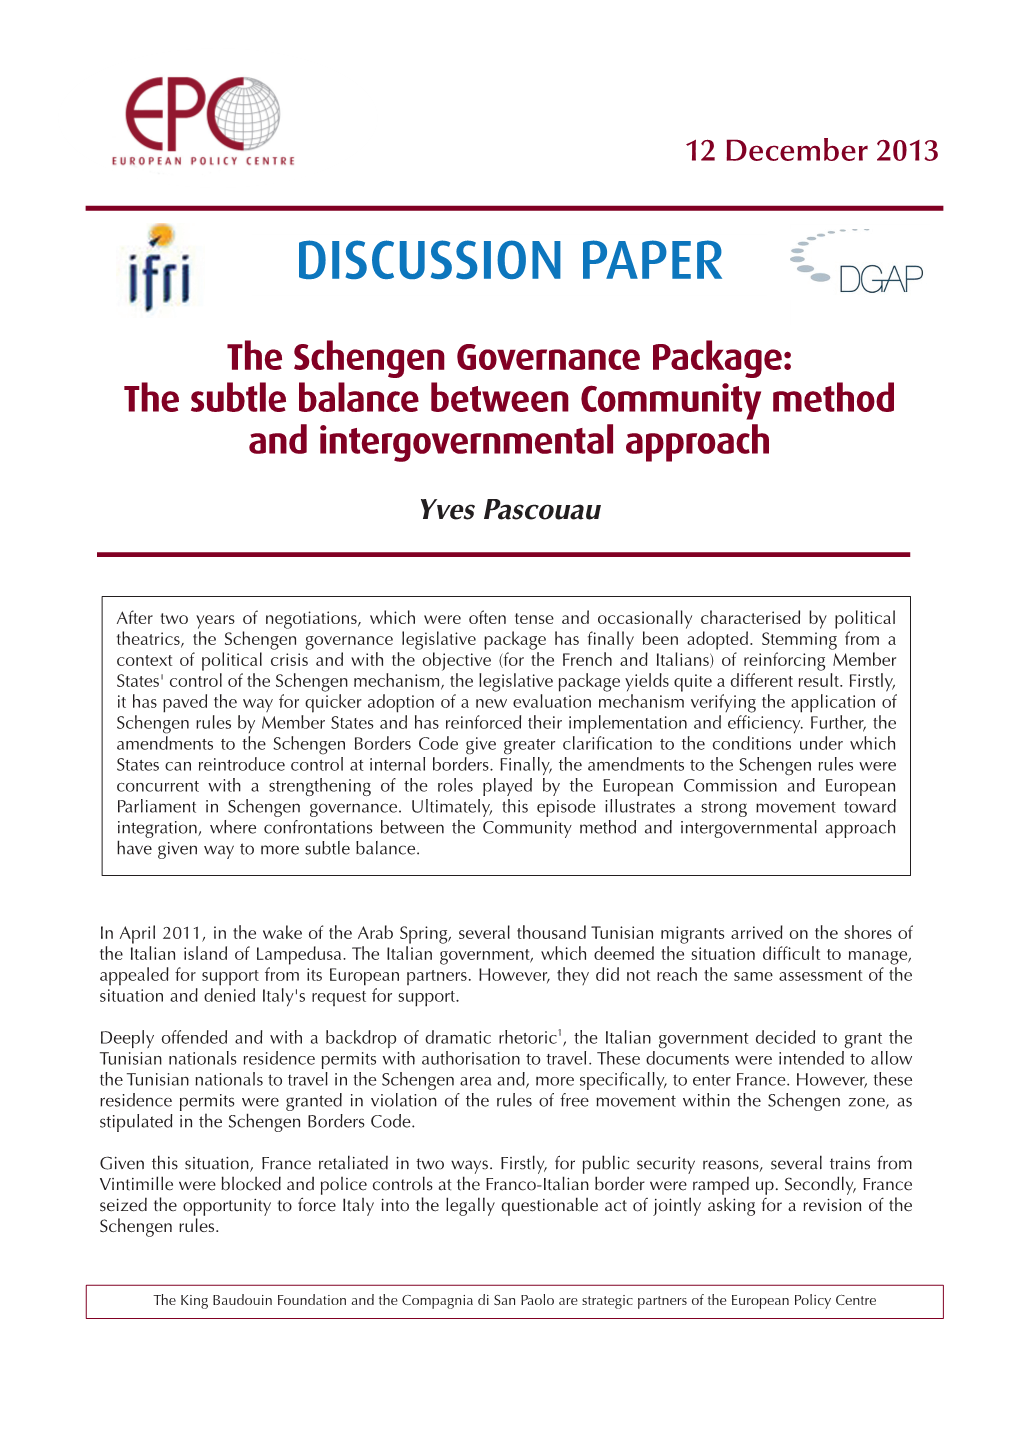 Schengen Governance Package: the Subtle Balance Between Community Method and Intergovernmental Approach